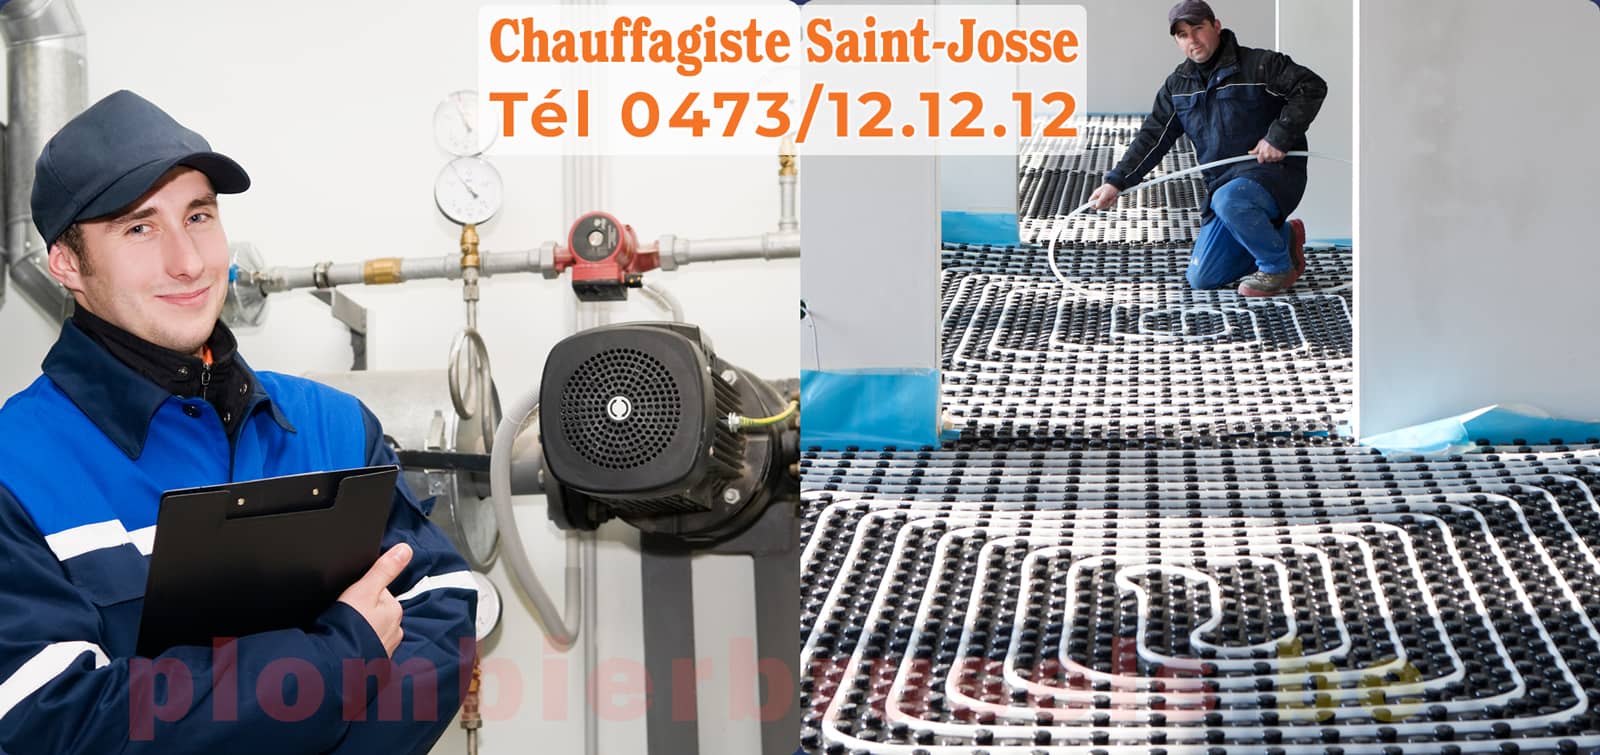 Chauffagiste Saint-Josse service de Chauffage tél 0473/12.12.12